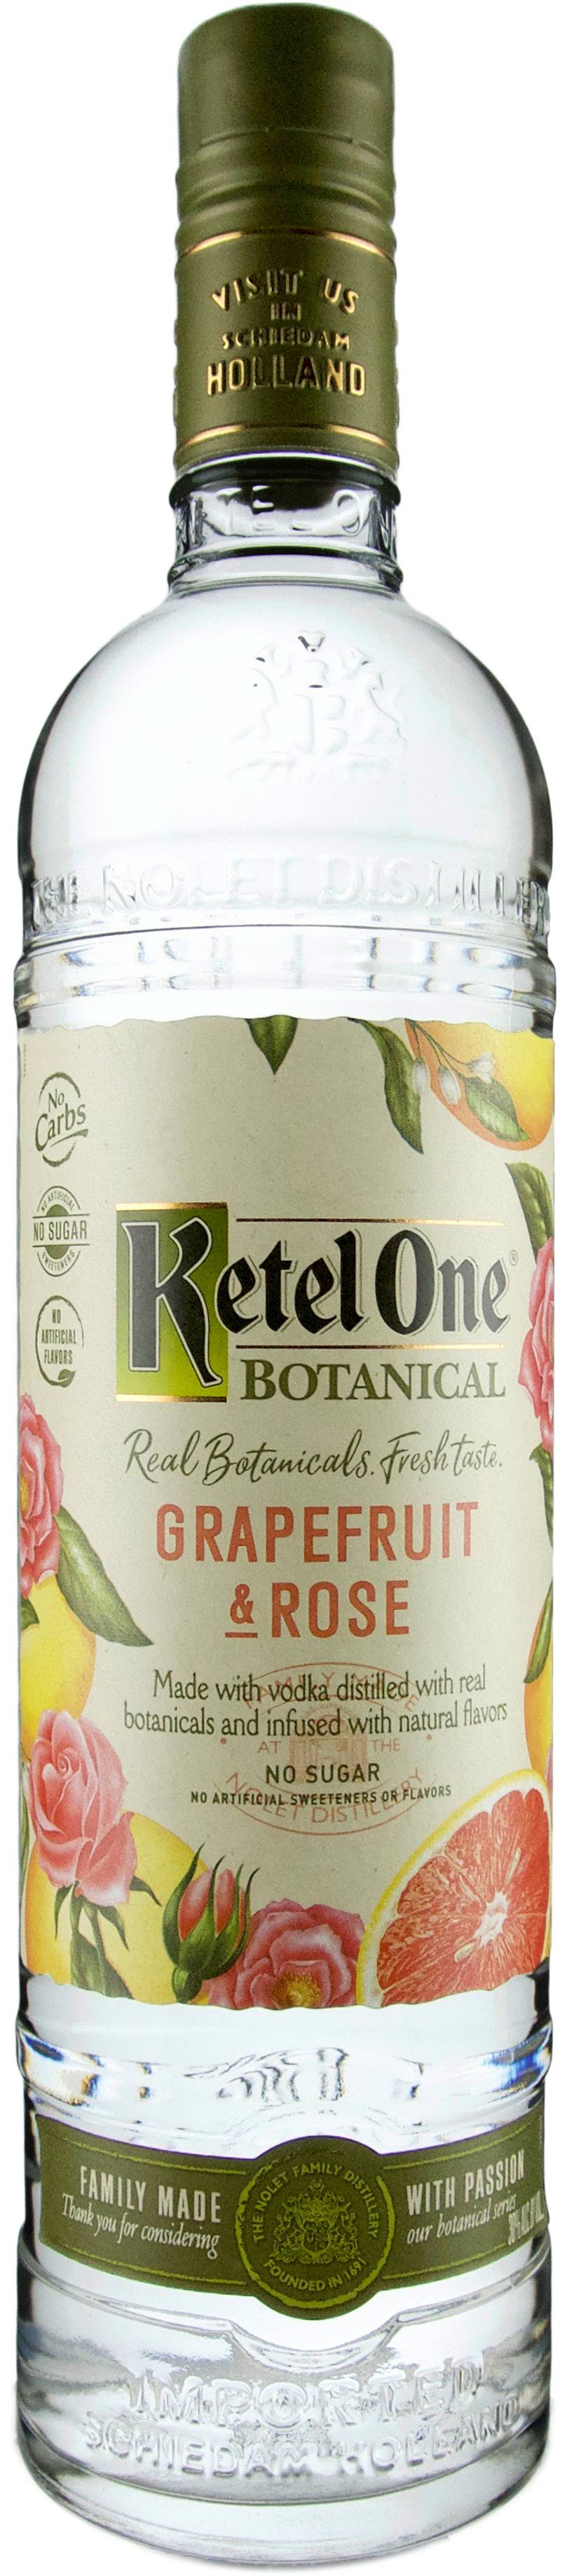 Ketel One Vodka, Grapefruit & Rose - 750 ml